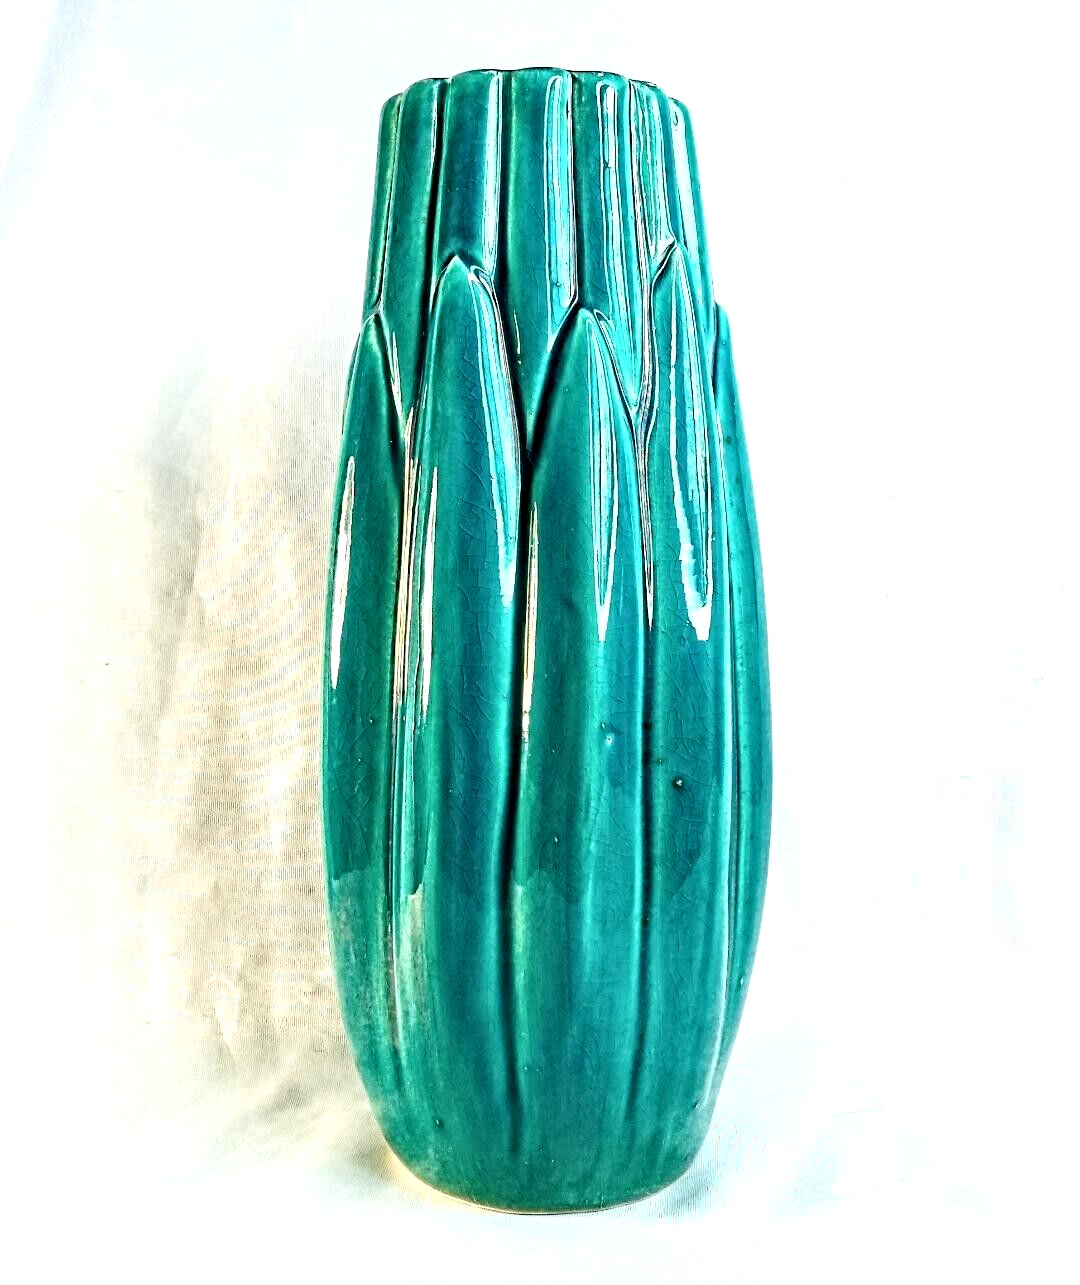 MCM Teal Blue Art Pottery Vase